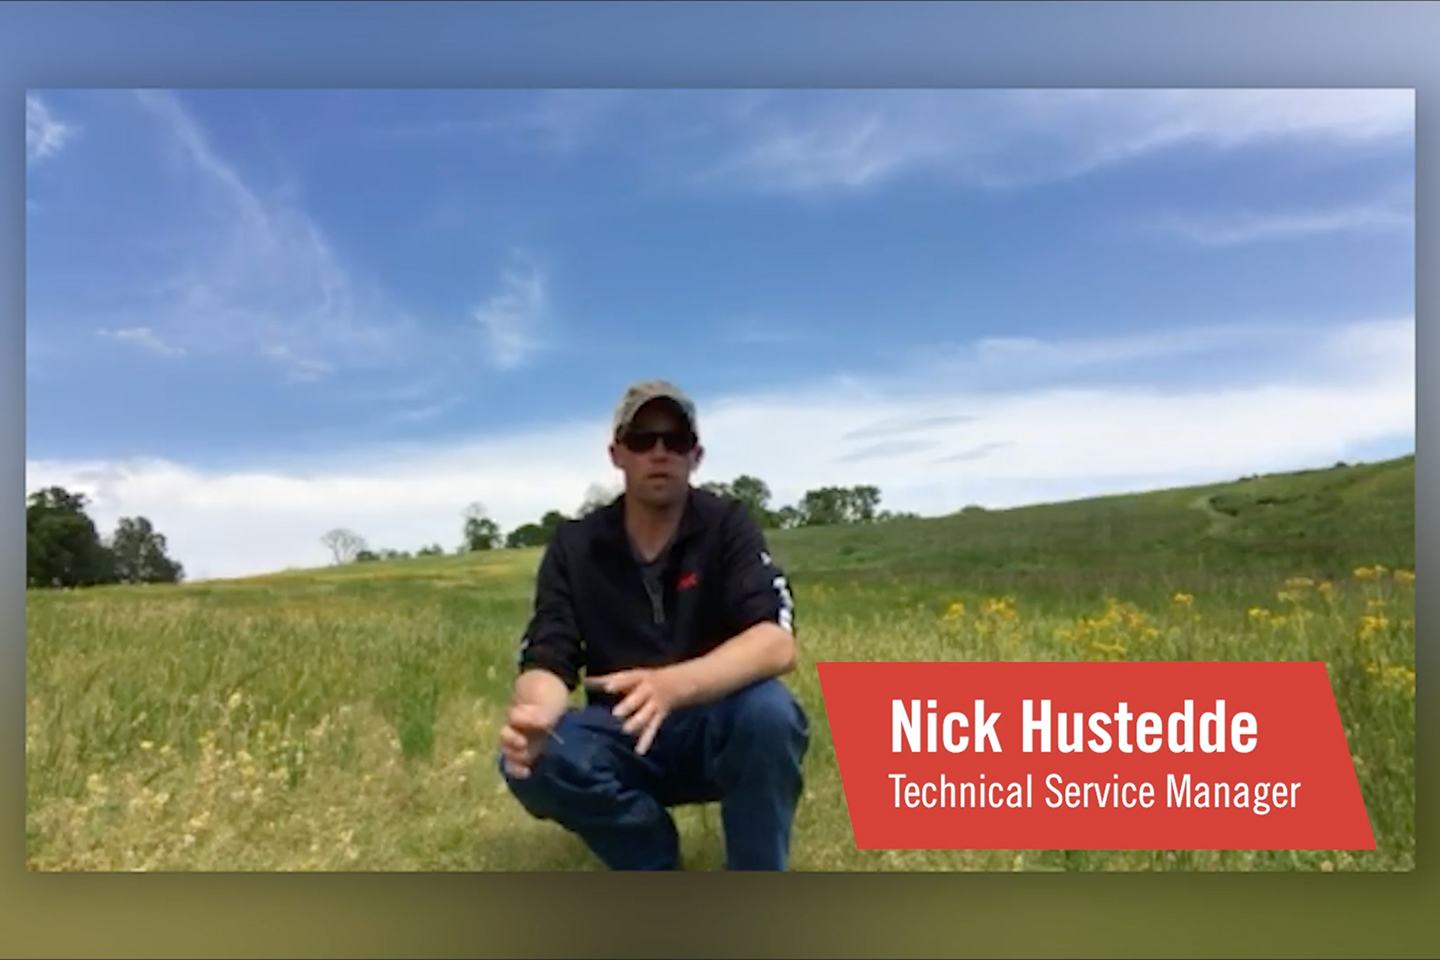 Nick Hustedde, Technical Service Manager